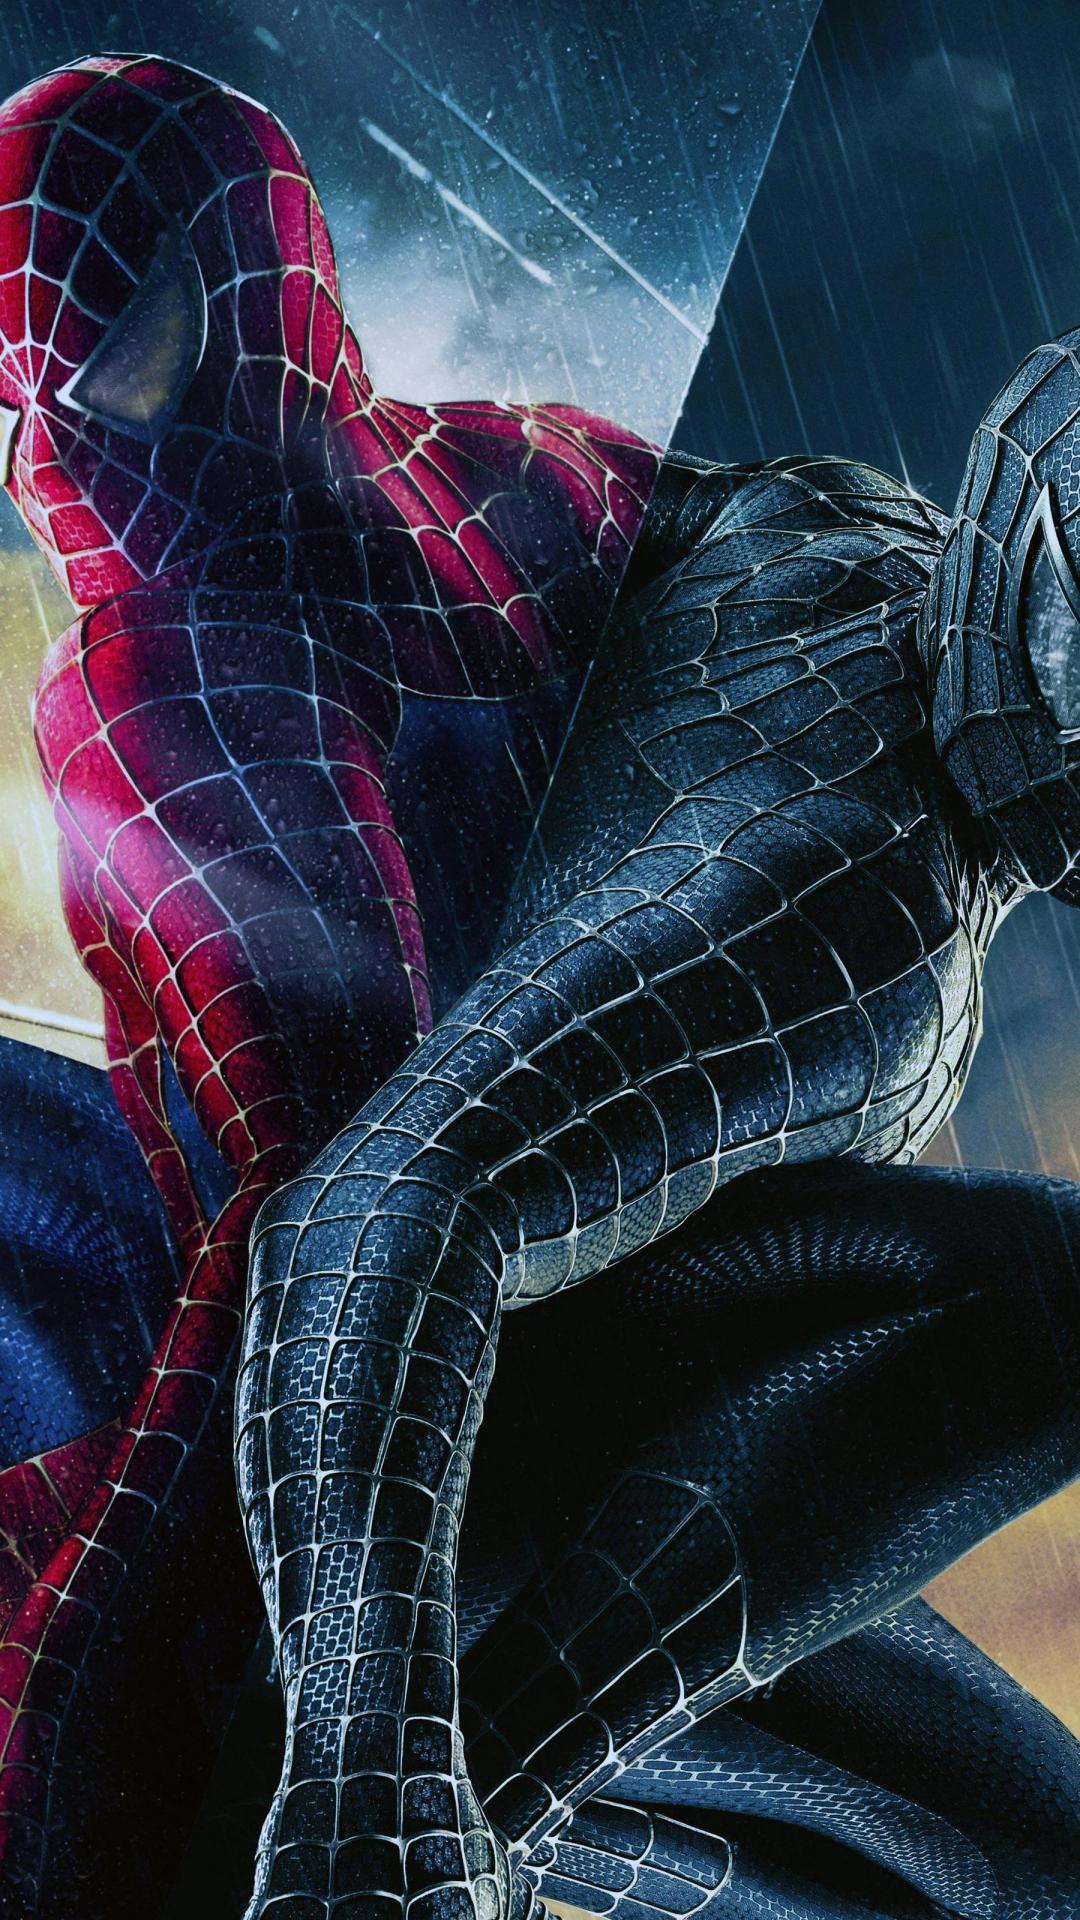 Spiderman 4 wallpaper for Samsung Galaxy s s5